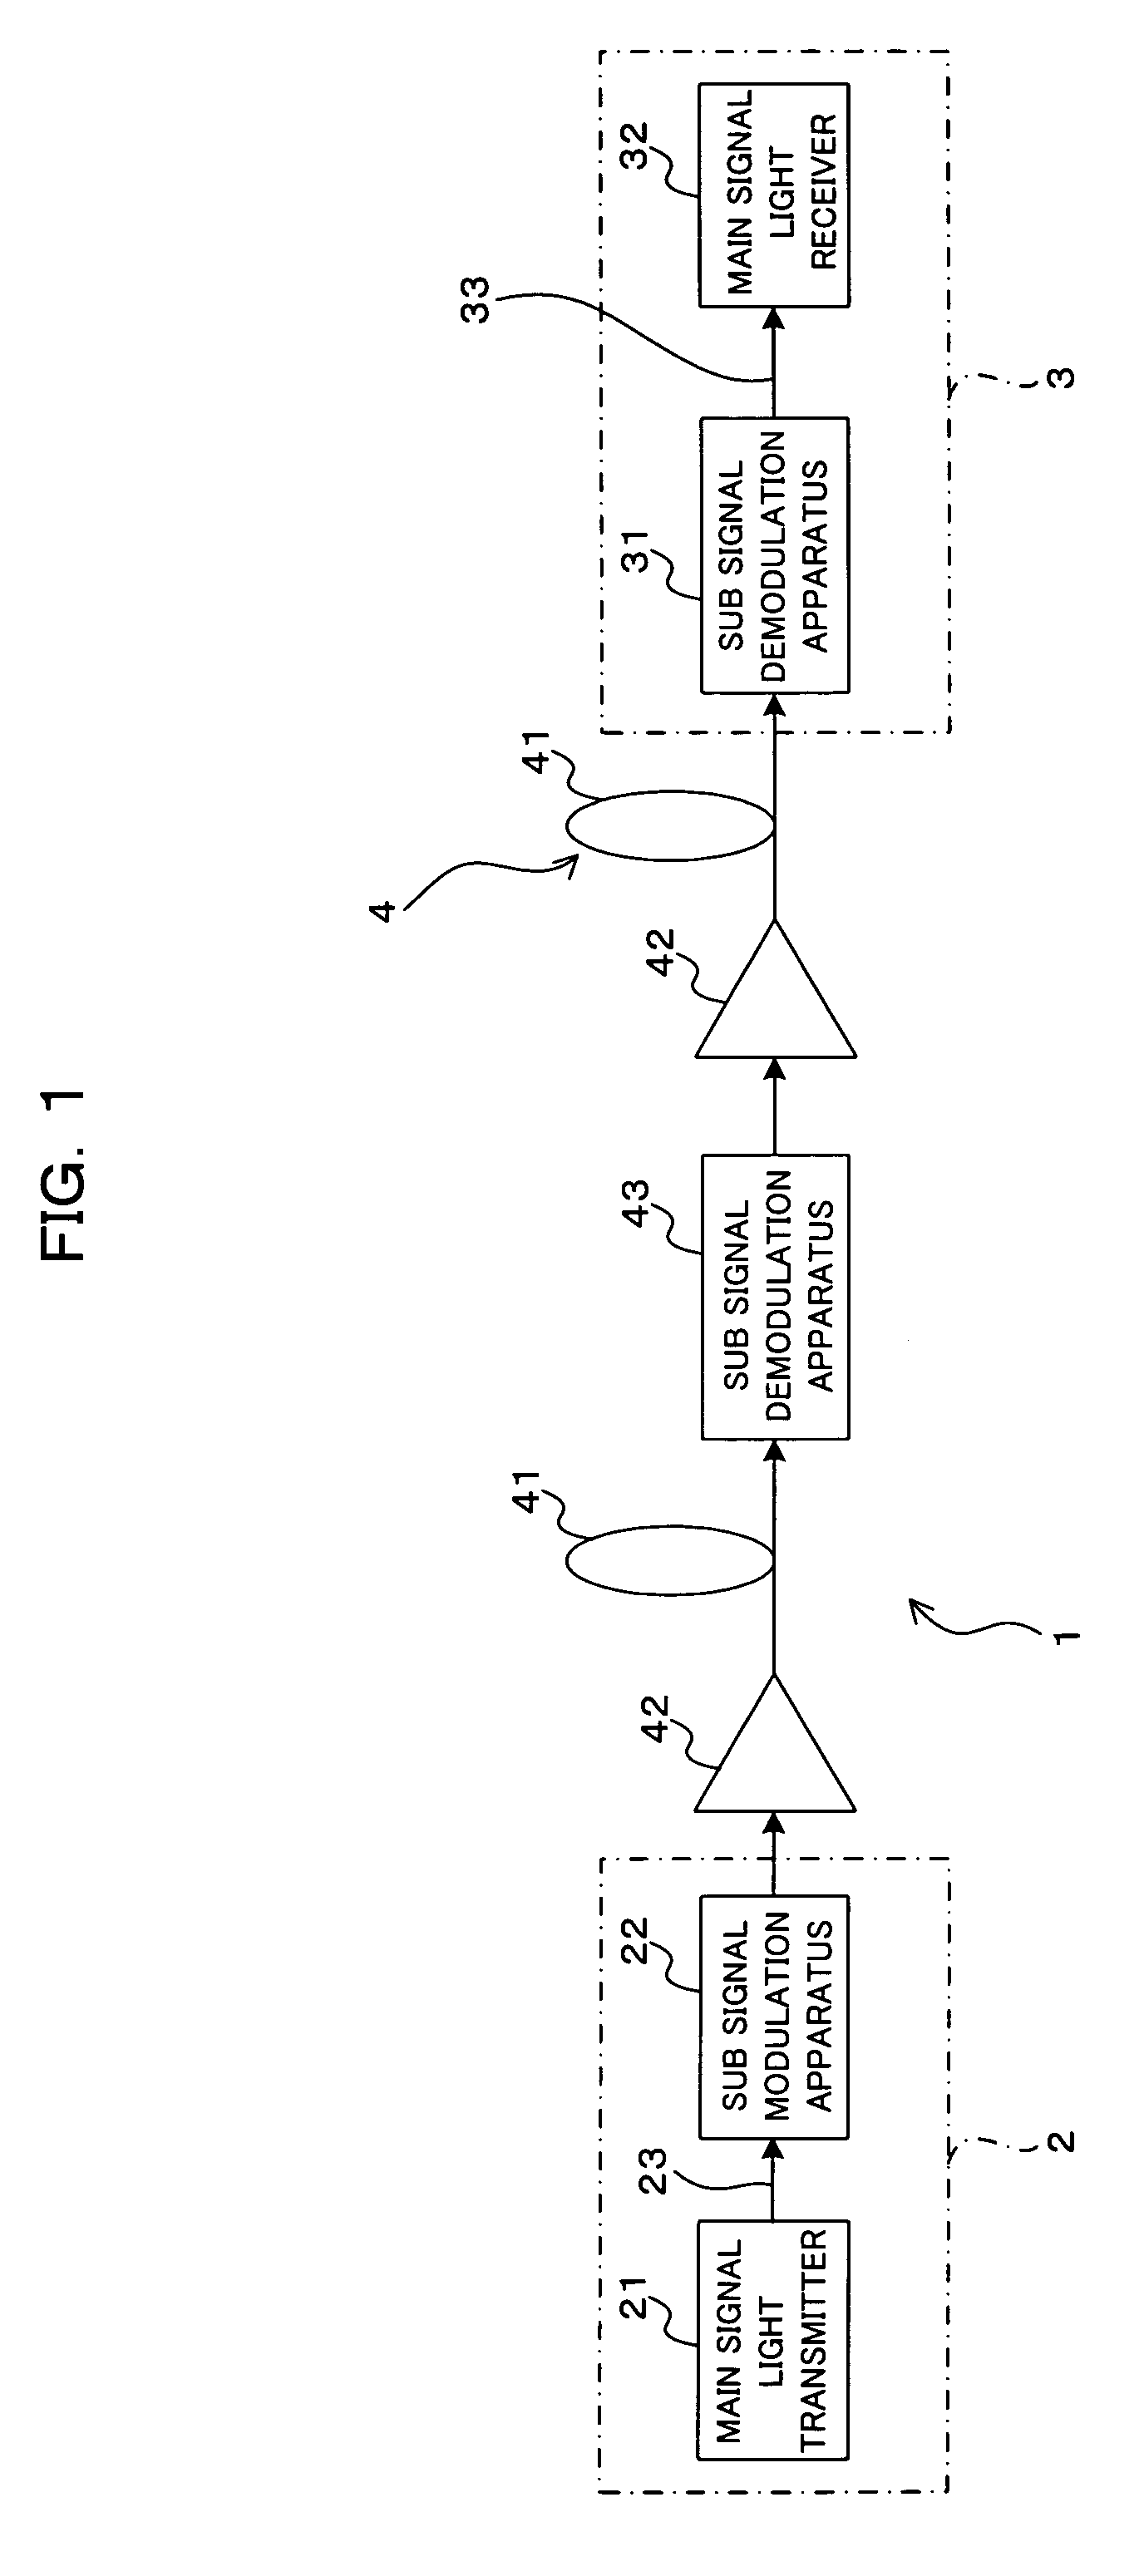 Sub signal modulation apparatus, sub signal demodulation apparatus, and sub signal modulation demodulation system